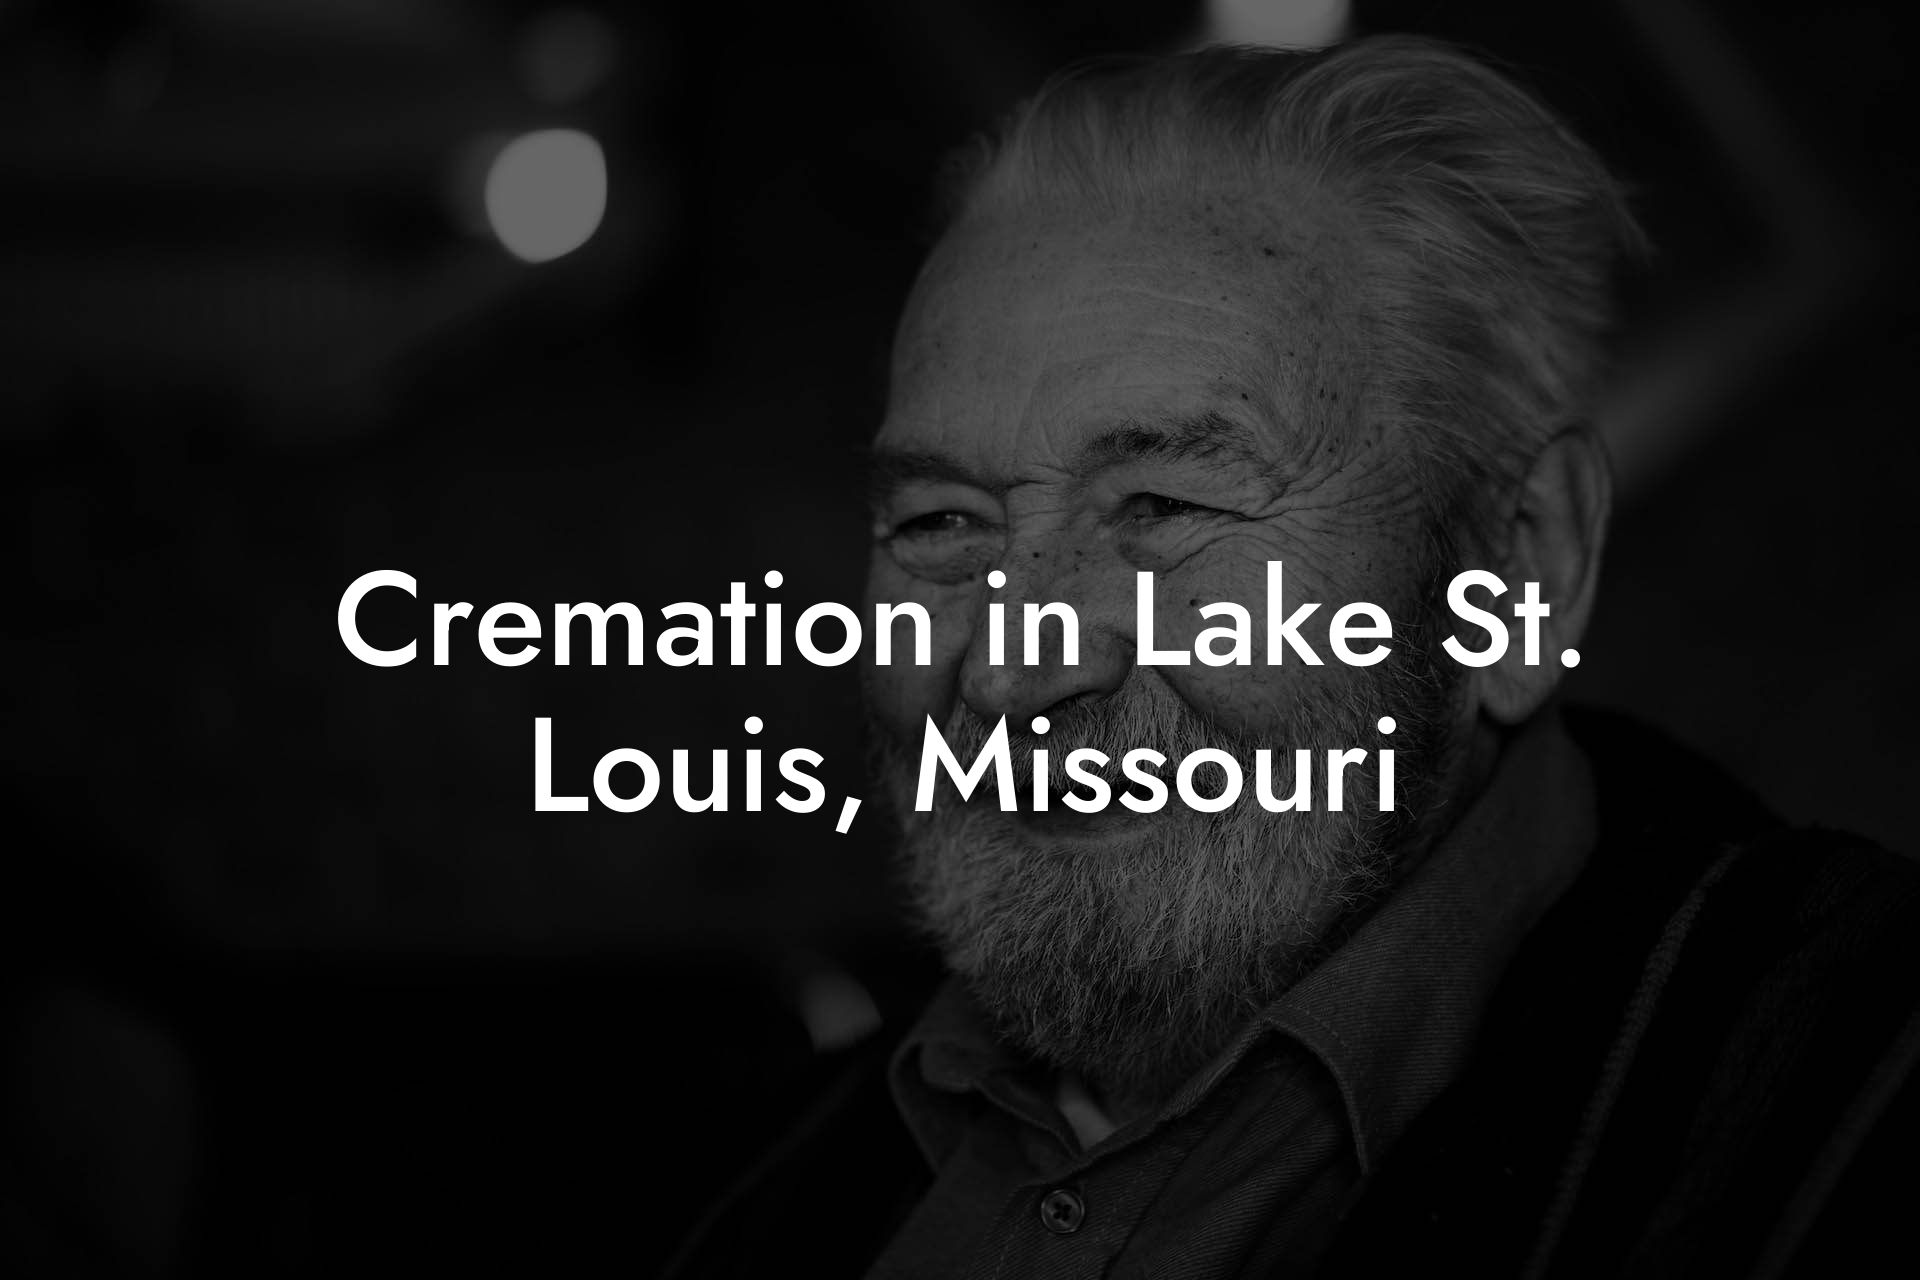 Cremation in Lake St. Louis, Missouri